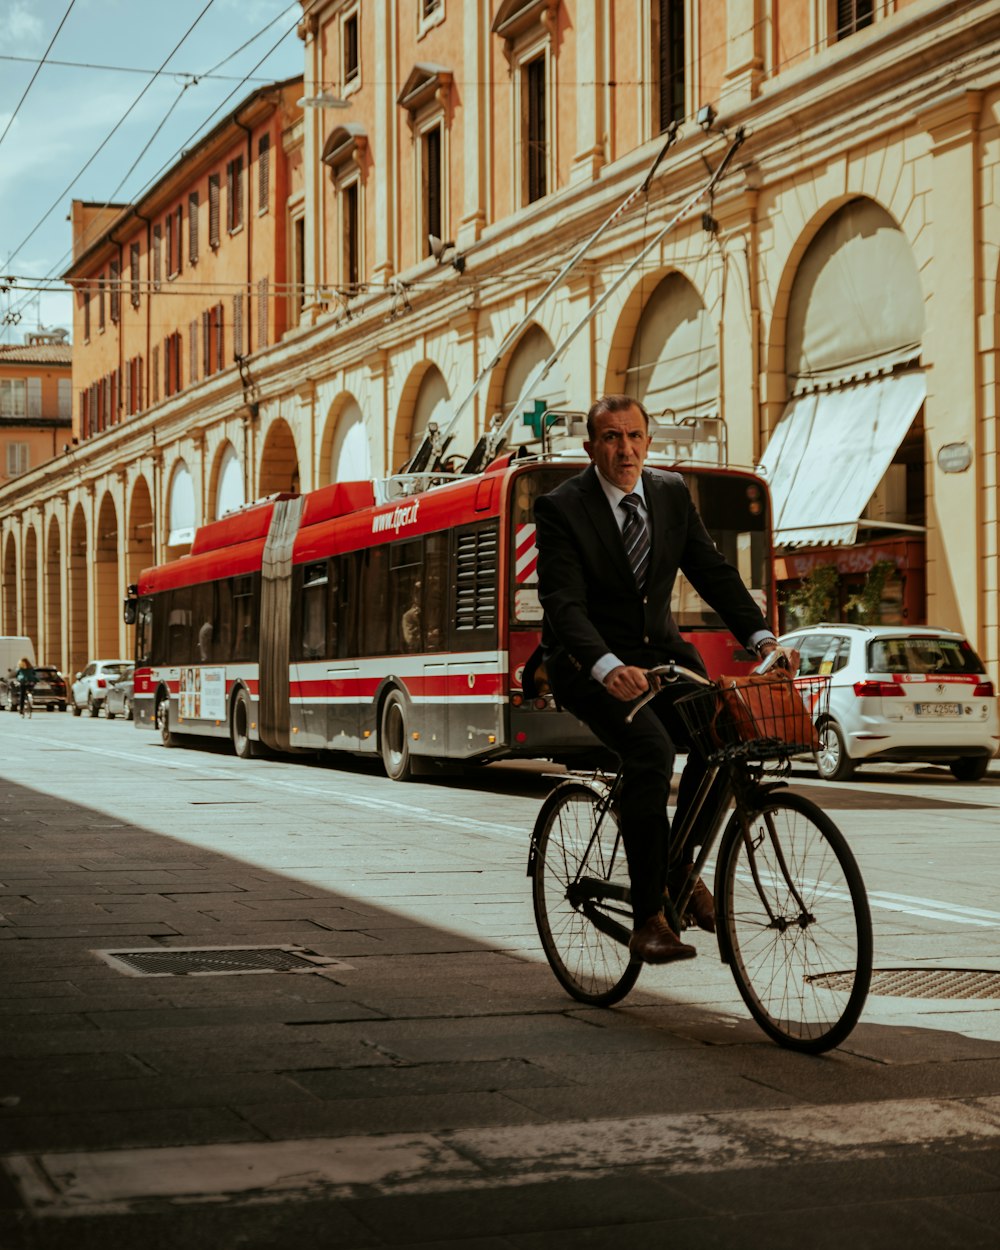 man in black suit riding bicycle on street during daytime